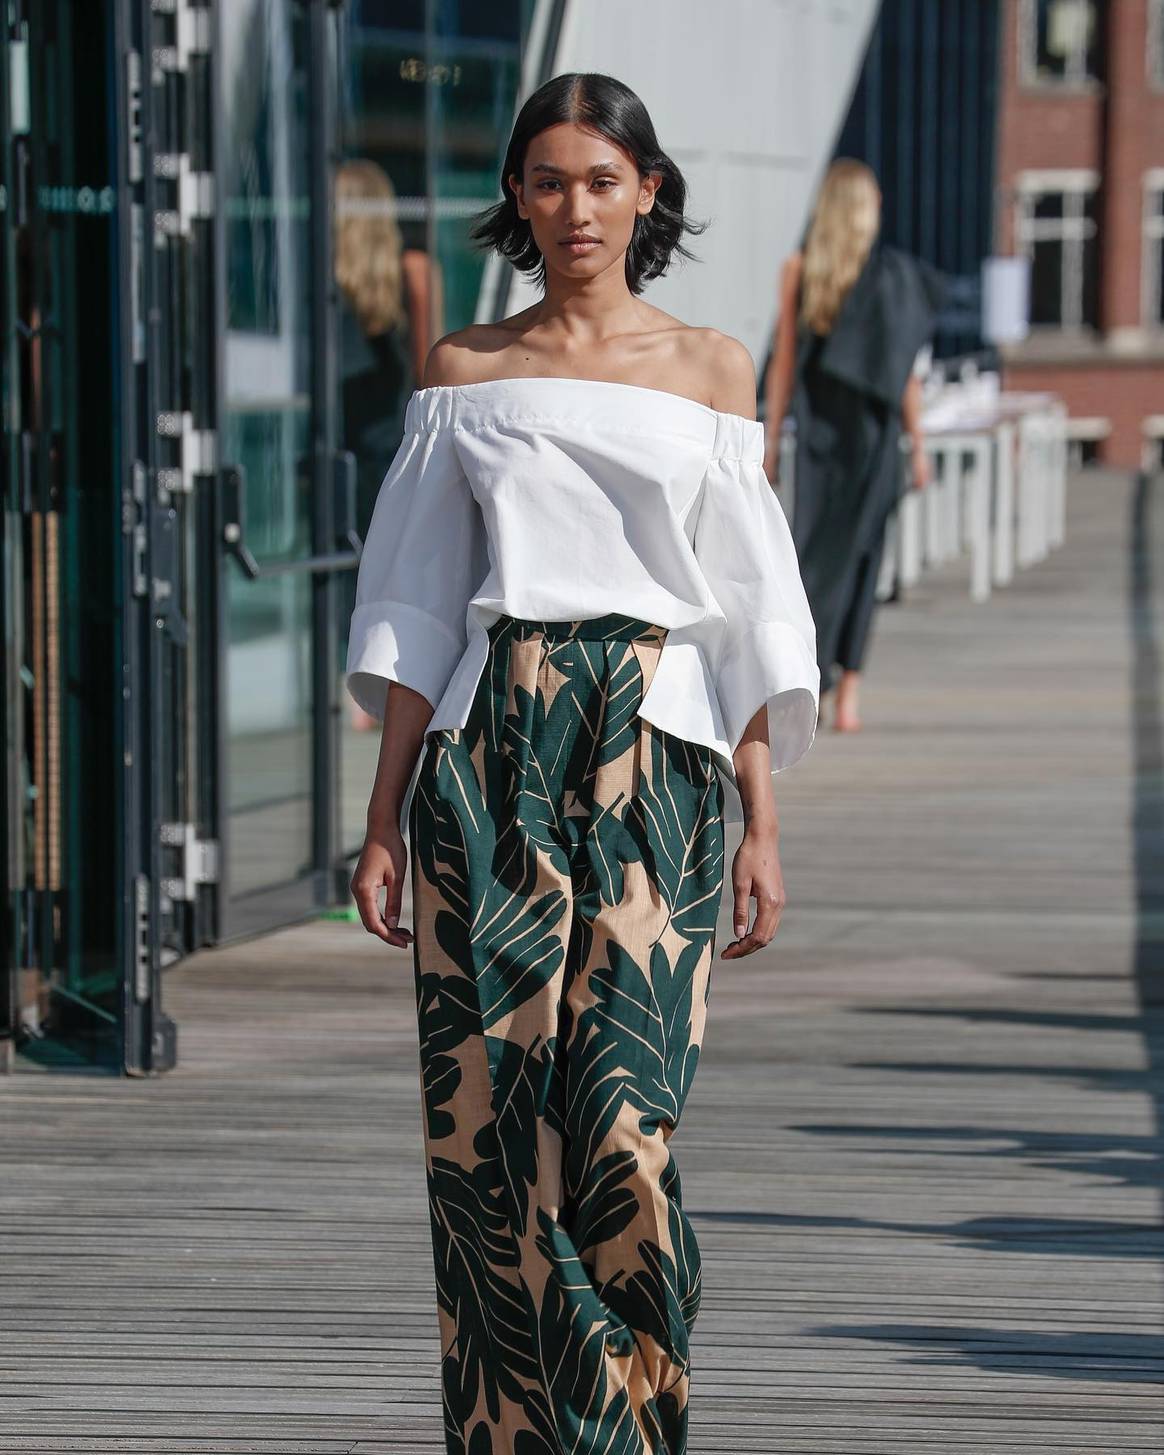 In beeld: Dit was de coronaproof september editie van Amsterdam Fashion Week